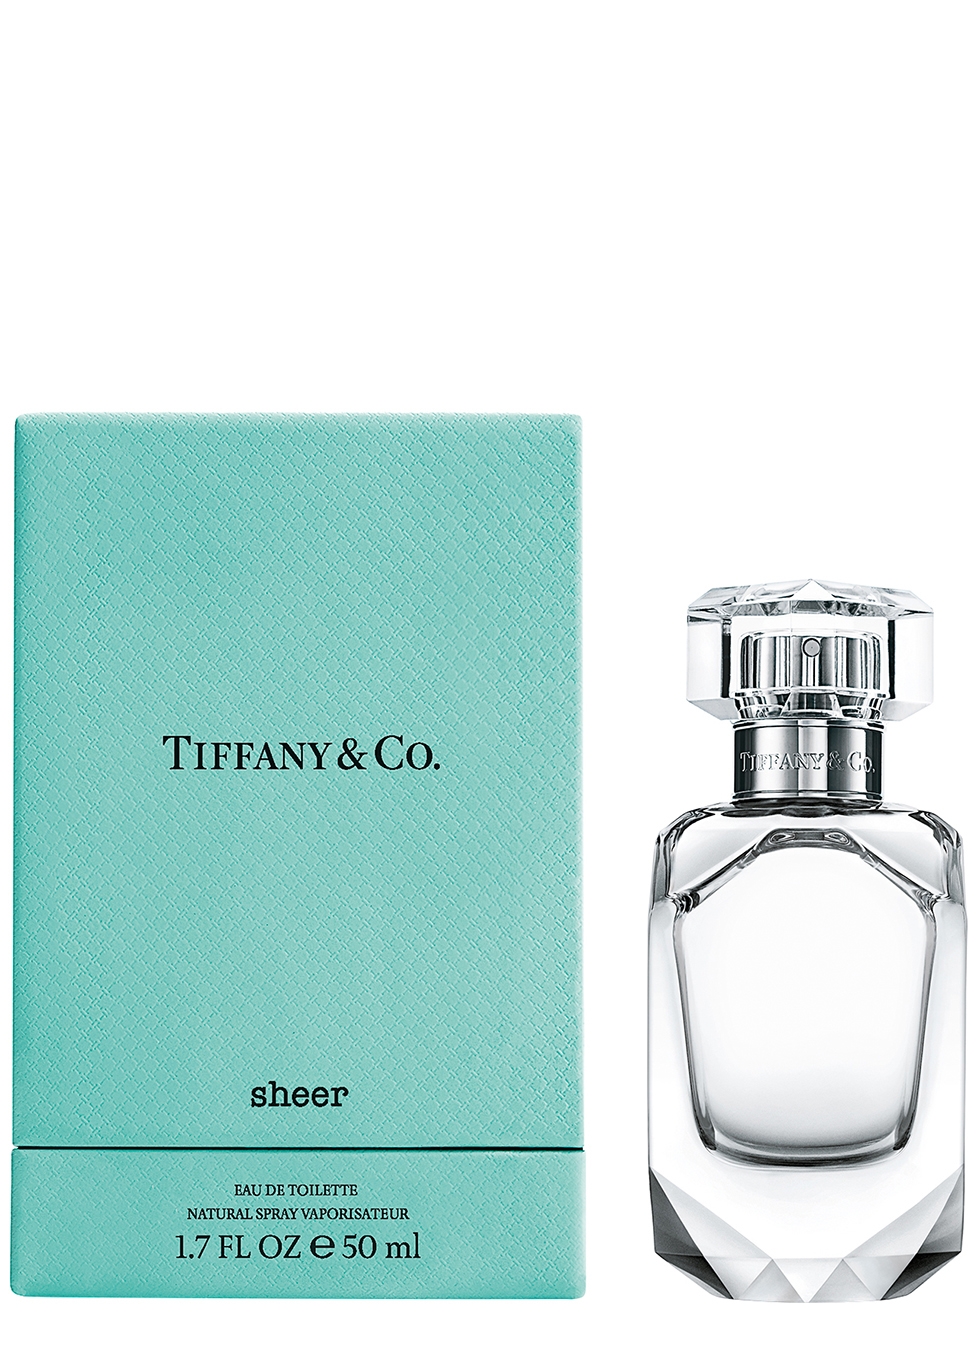 tiffany sheer perfume